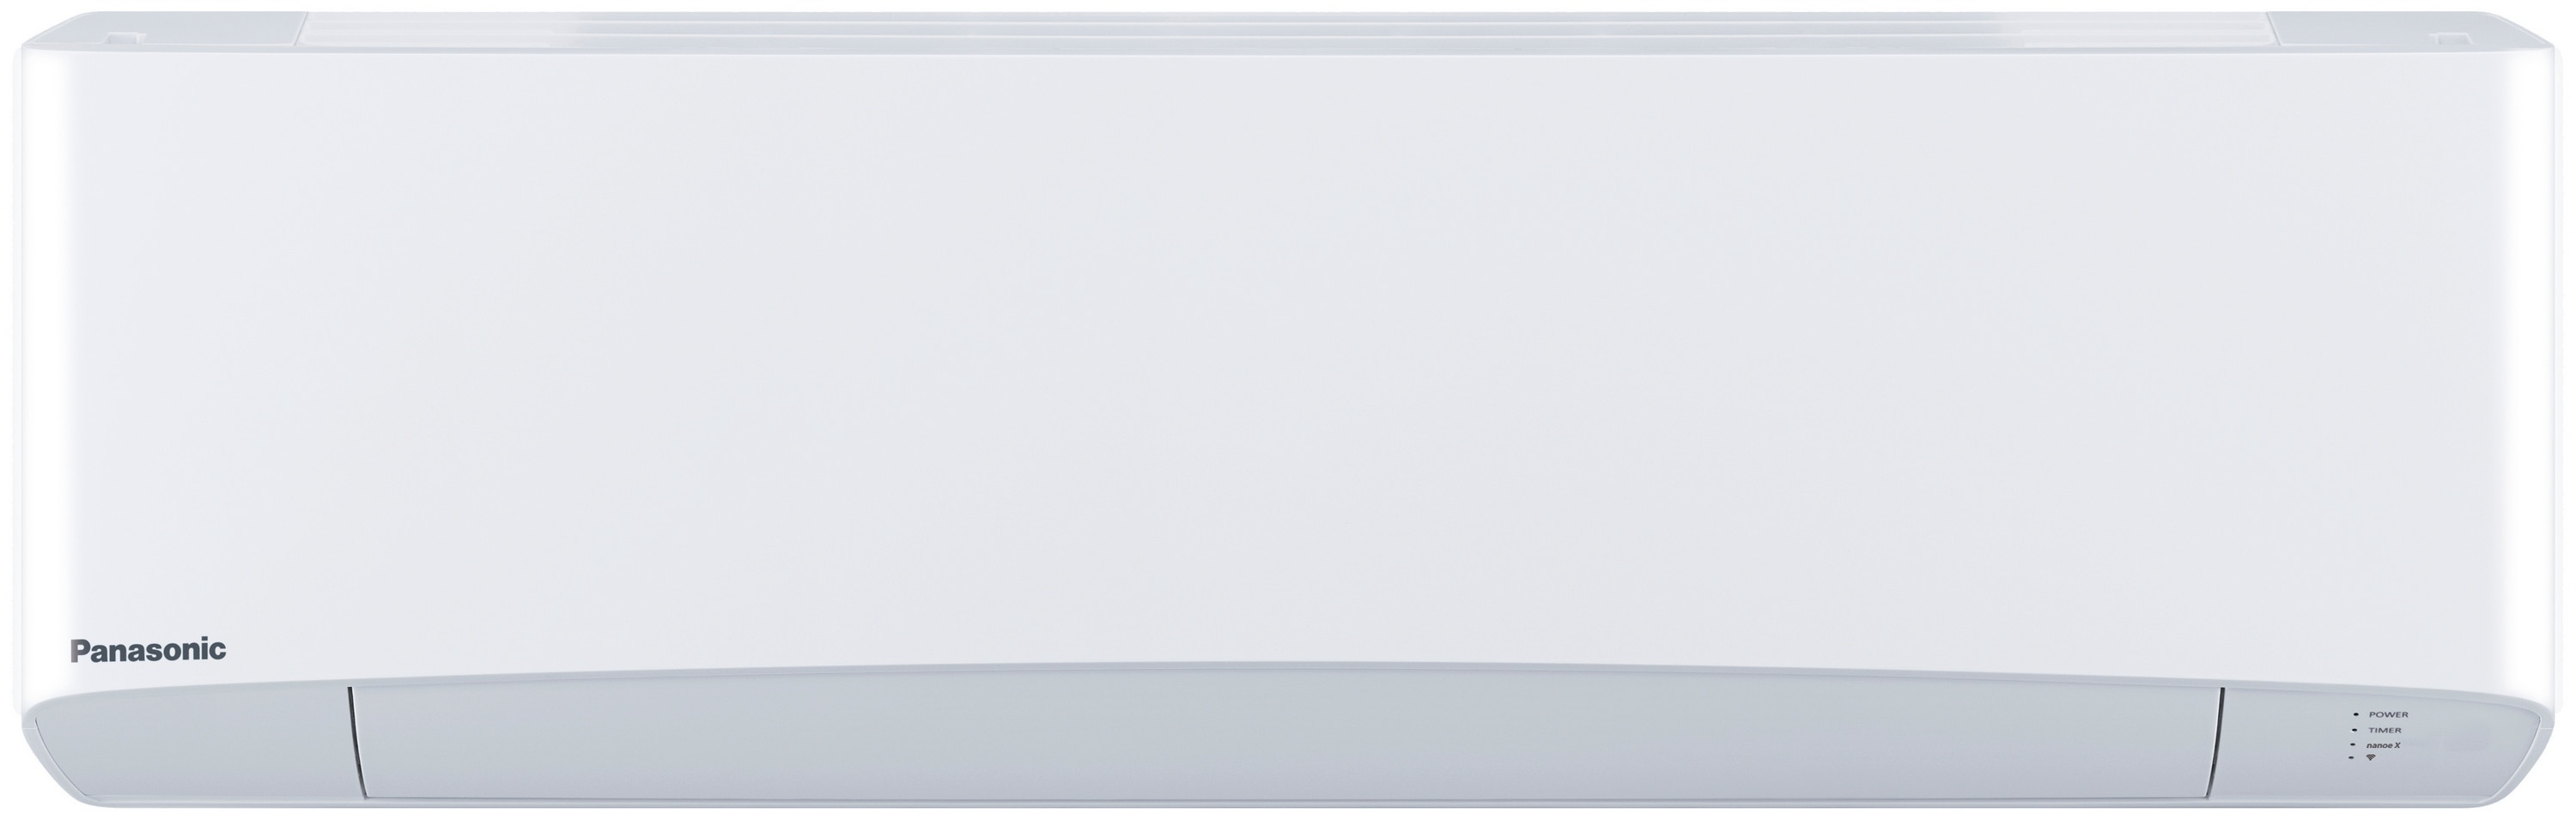 Кондиционер сплит-система Panasonic Flagship White CS/CU-Z25TKEW цена 47999.00 грн - фотография 2